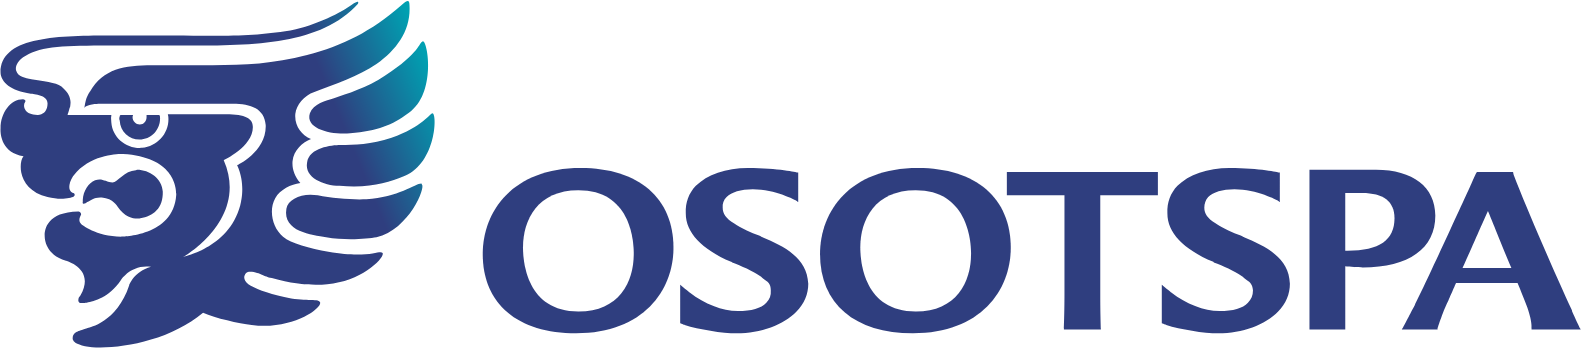 Osotspa logo large (transparent PNG)